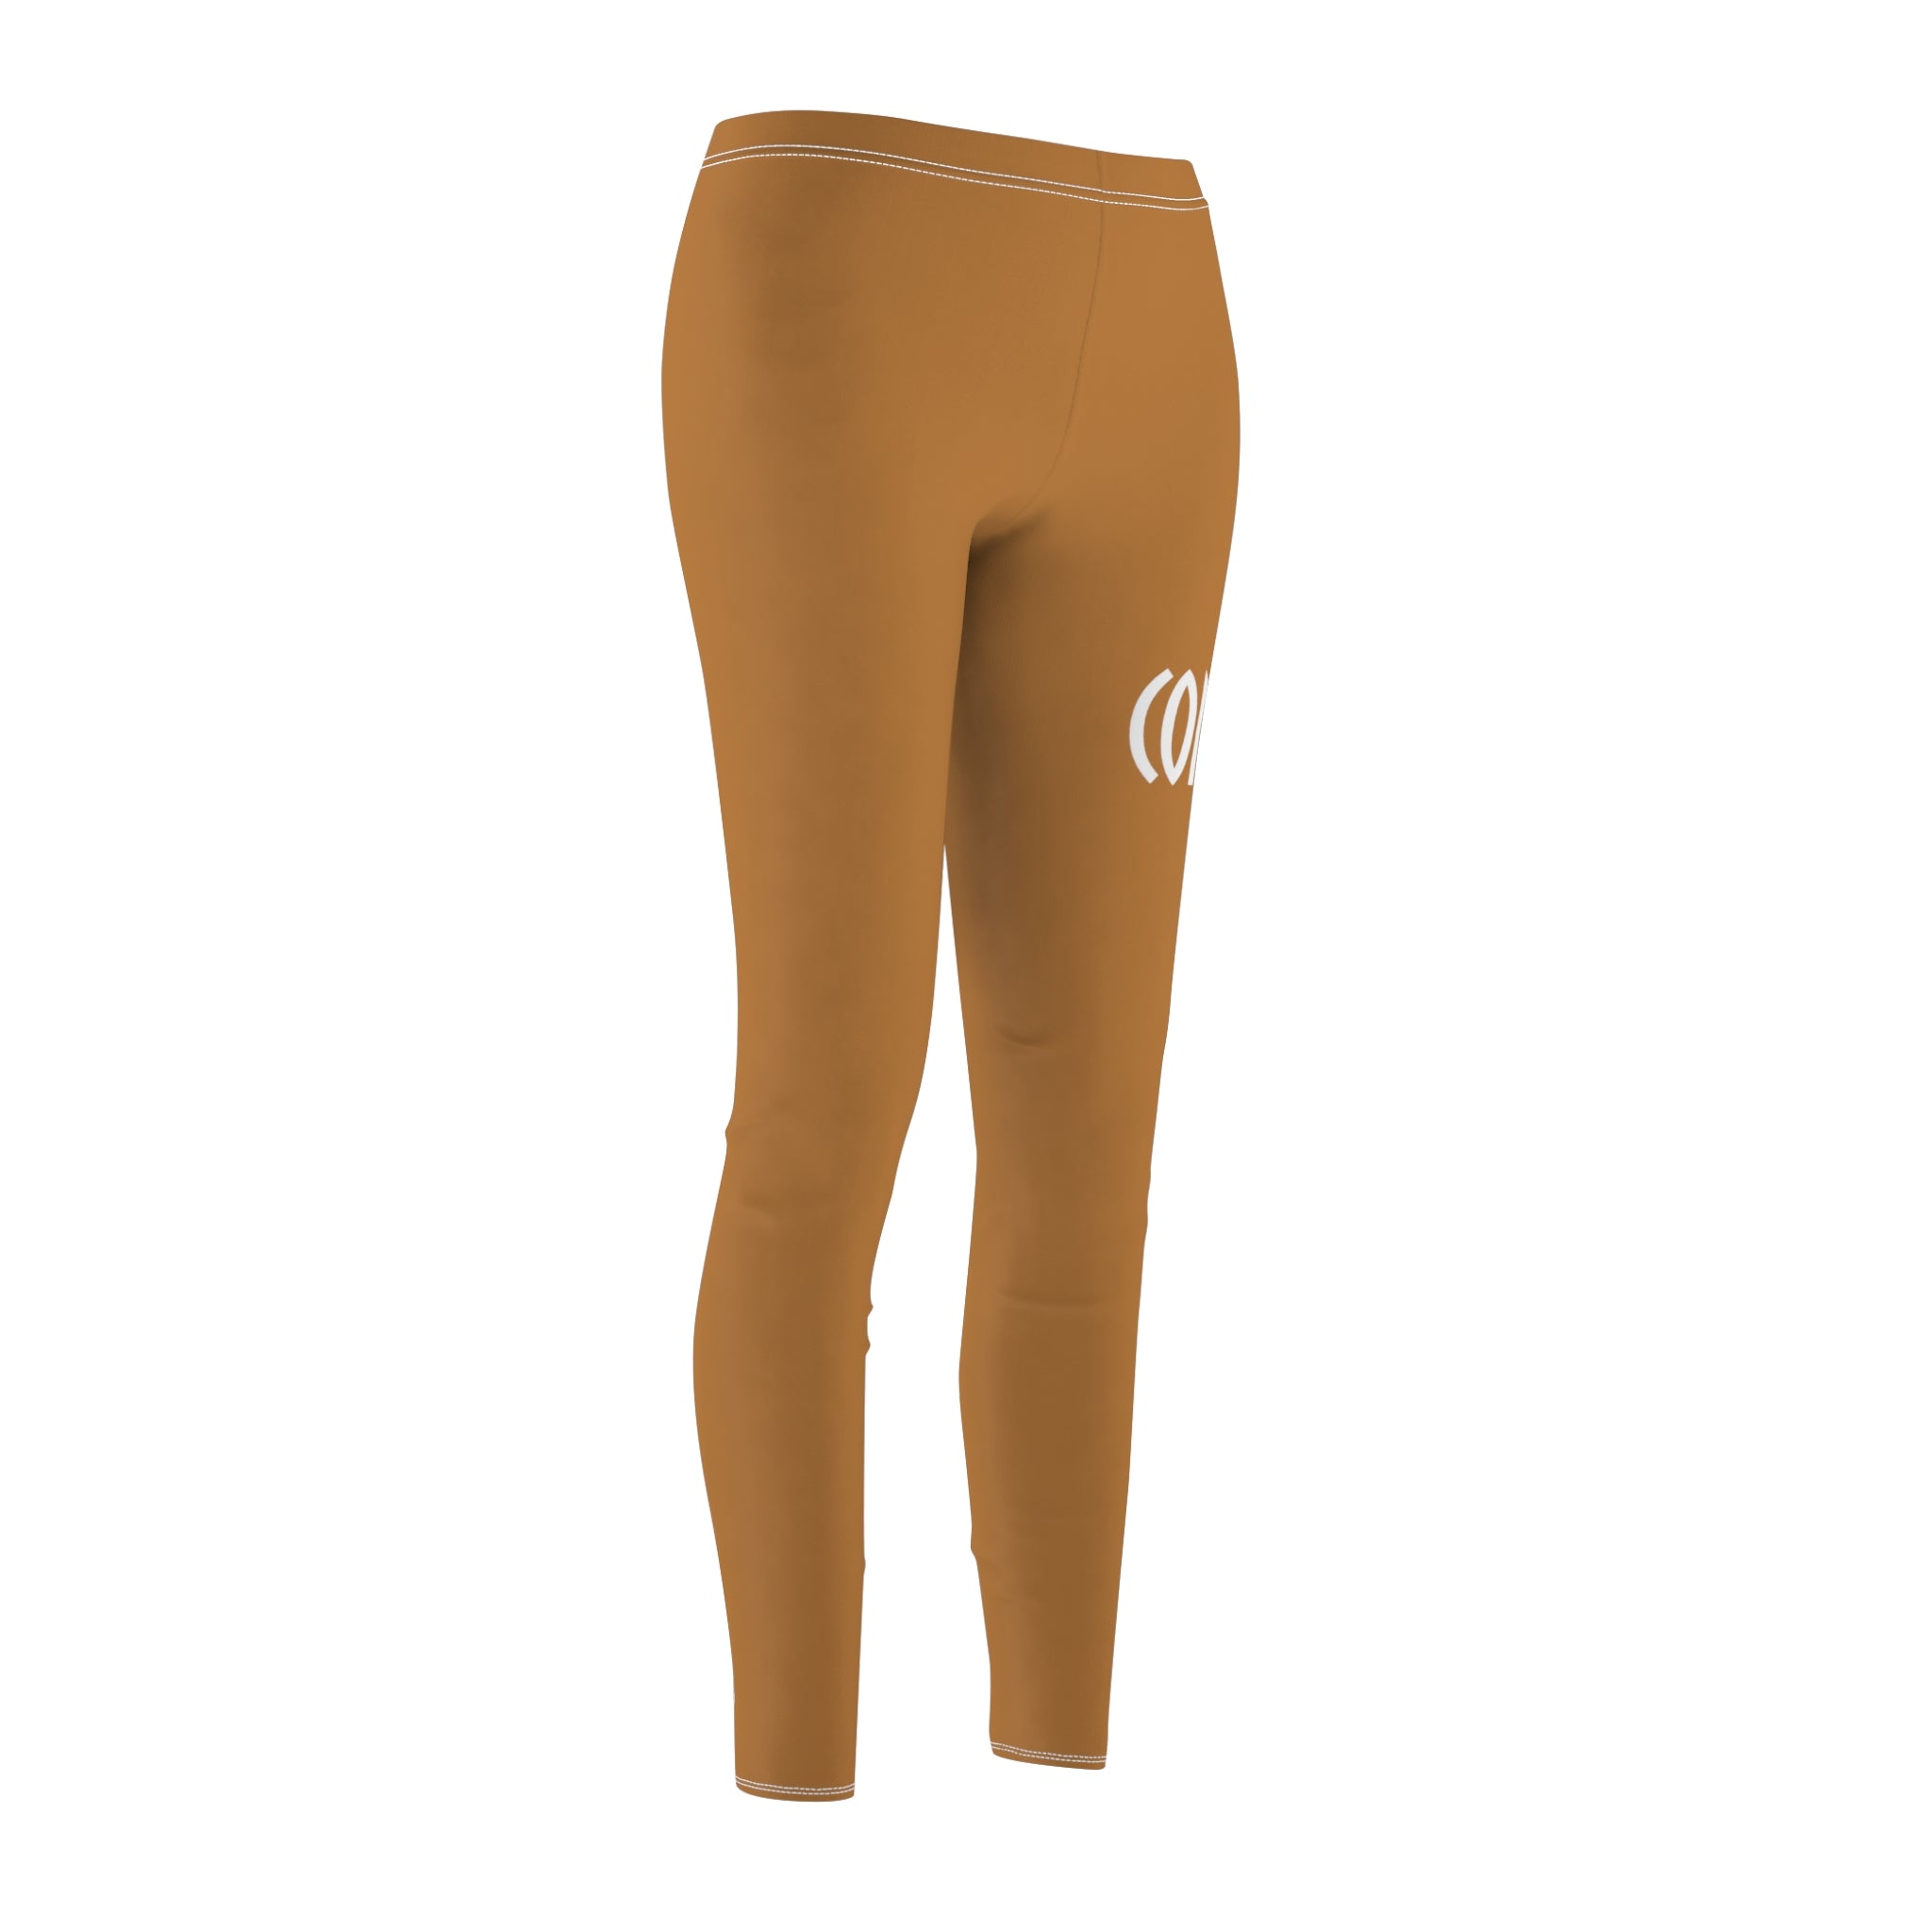 CombinedMinds Women's Cut & Sew Casual Leggings-Light Brown/White Logo